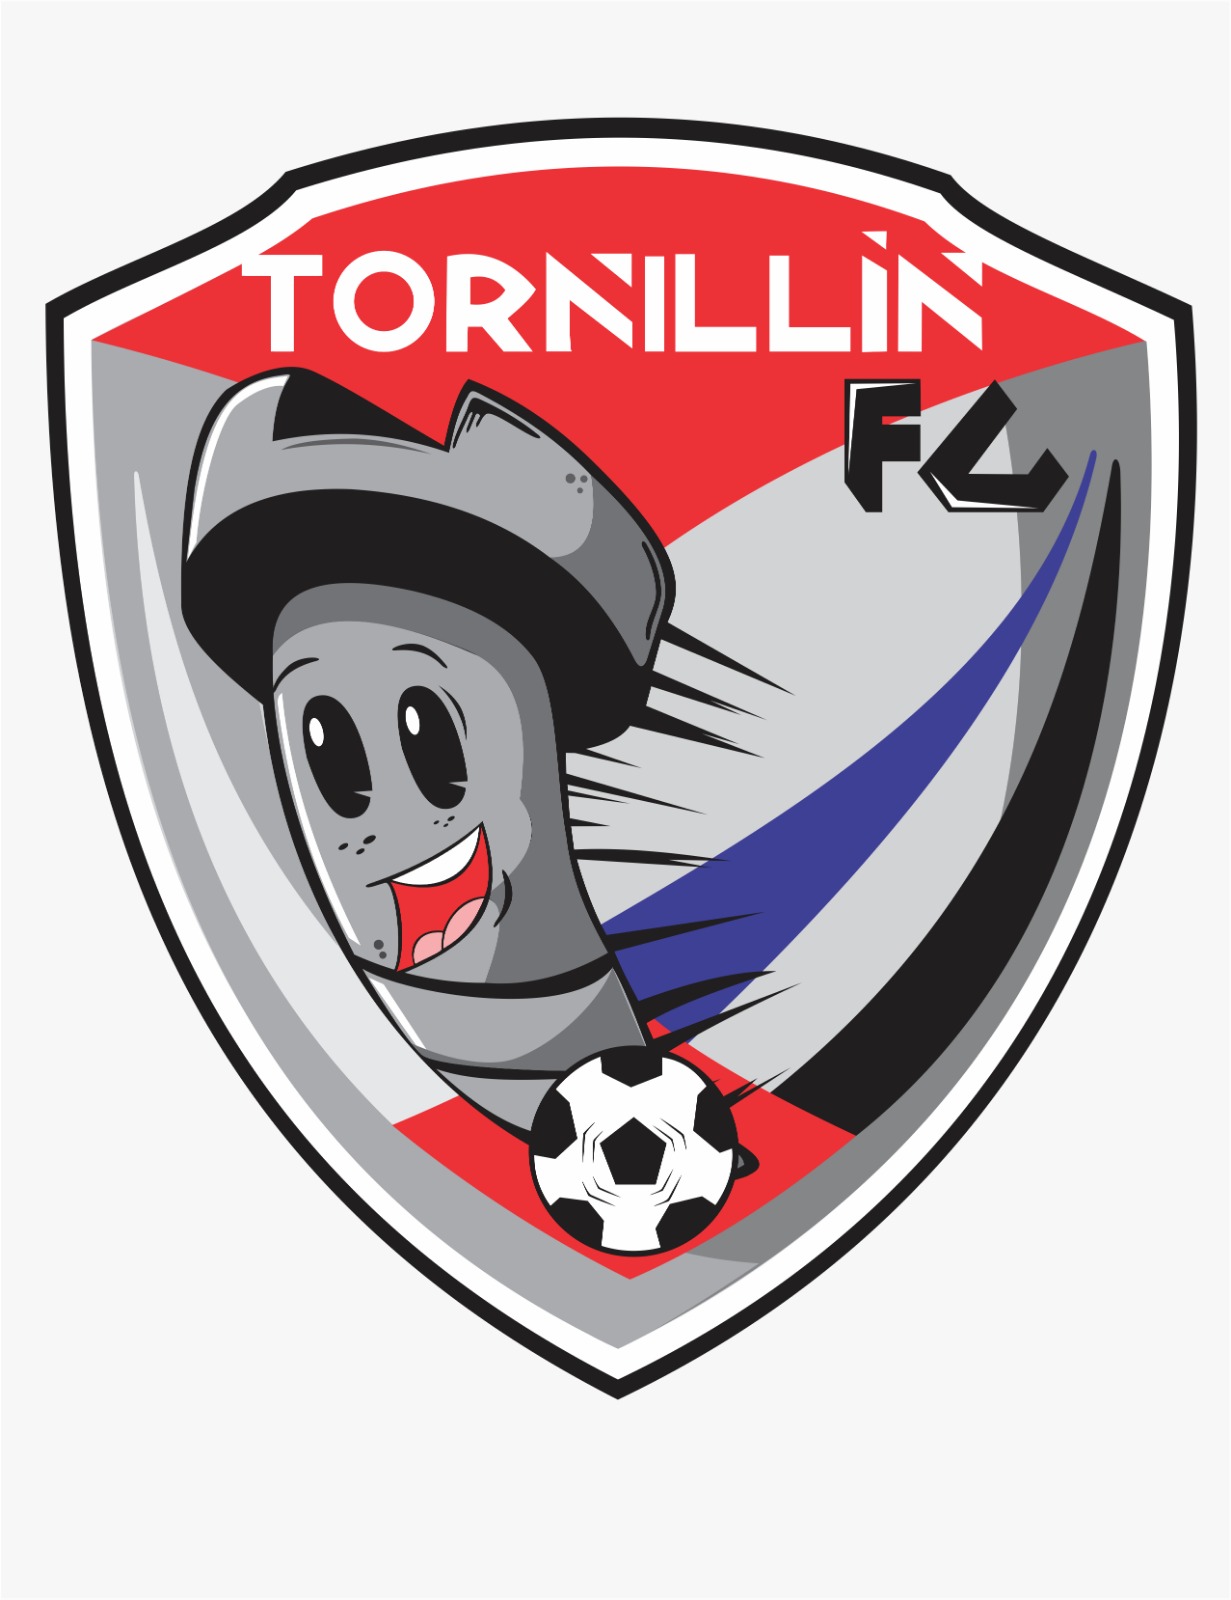 TORNILLIN FC